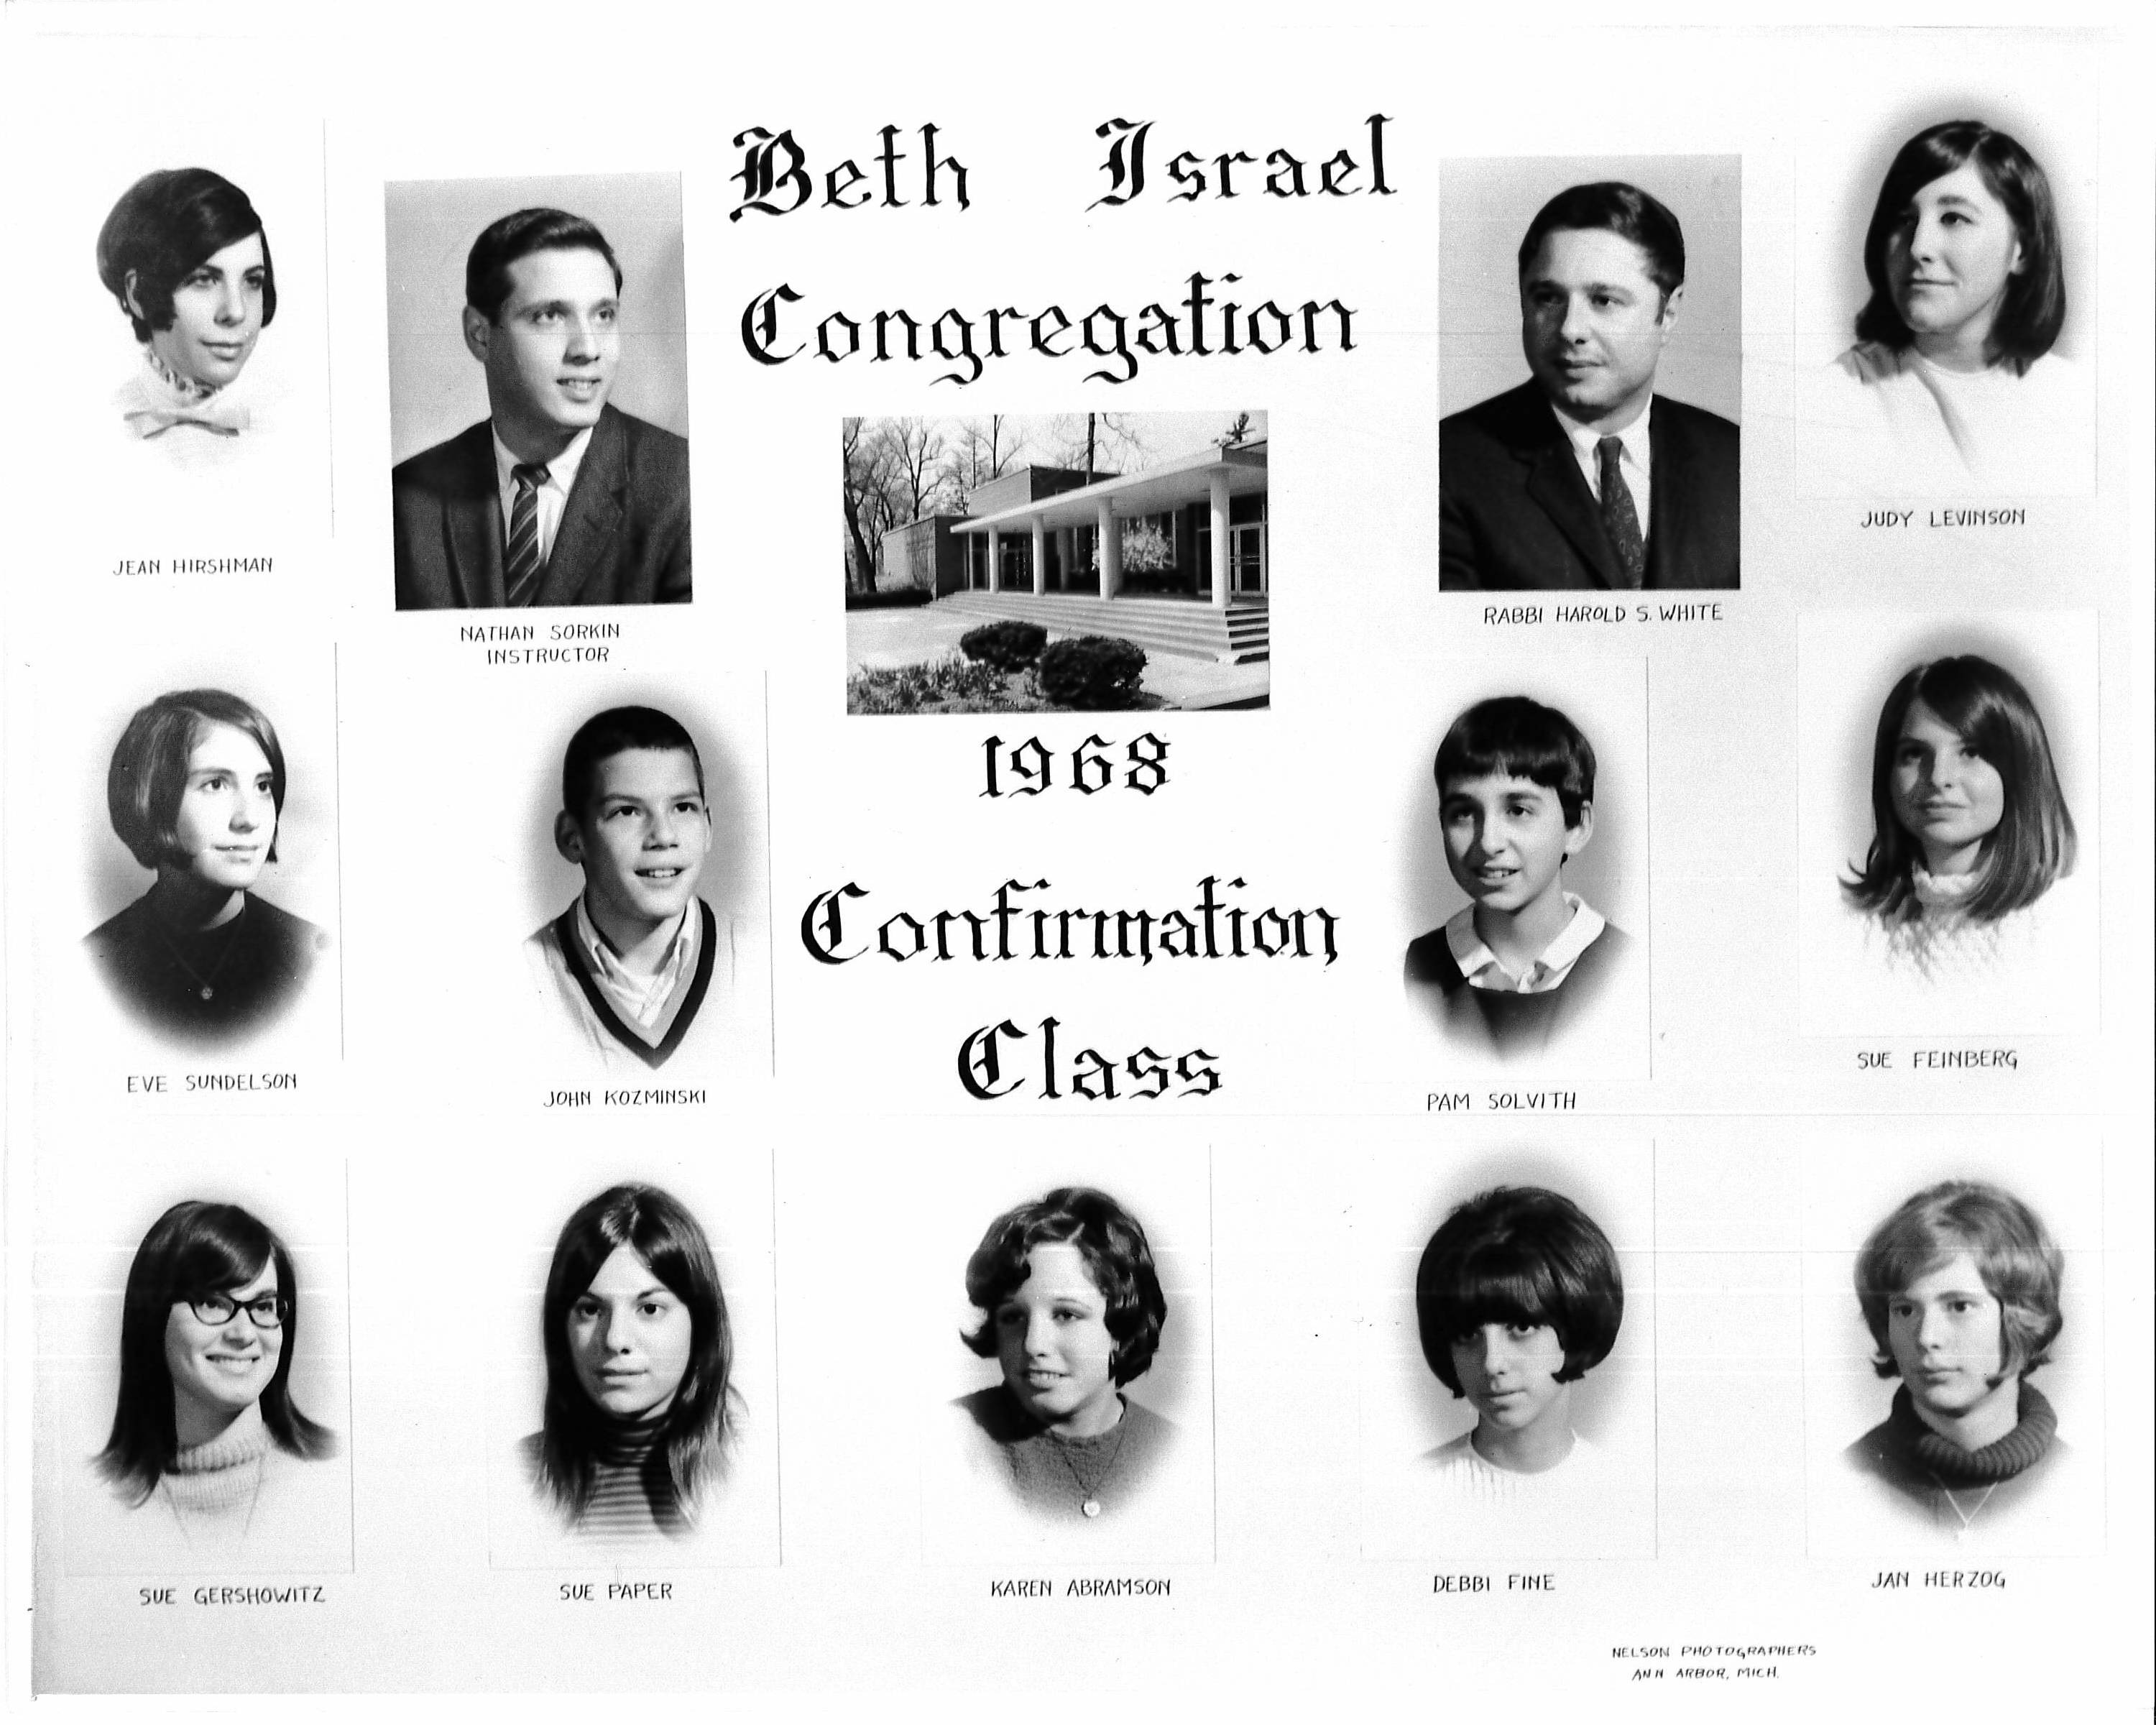 1968 confirmation class.